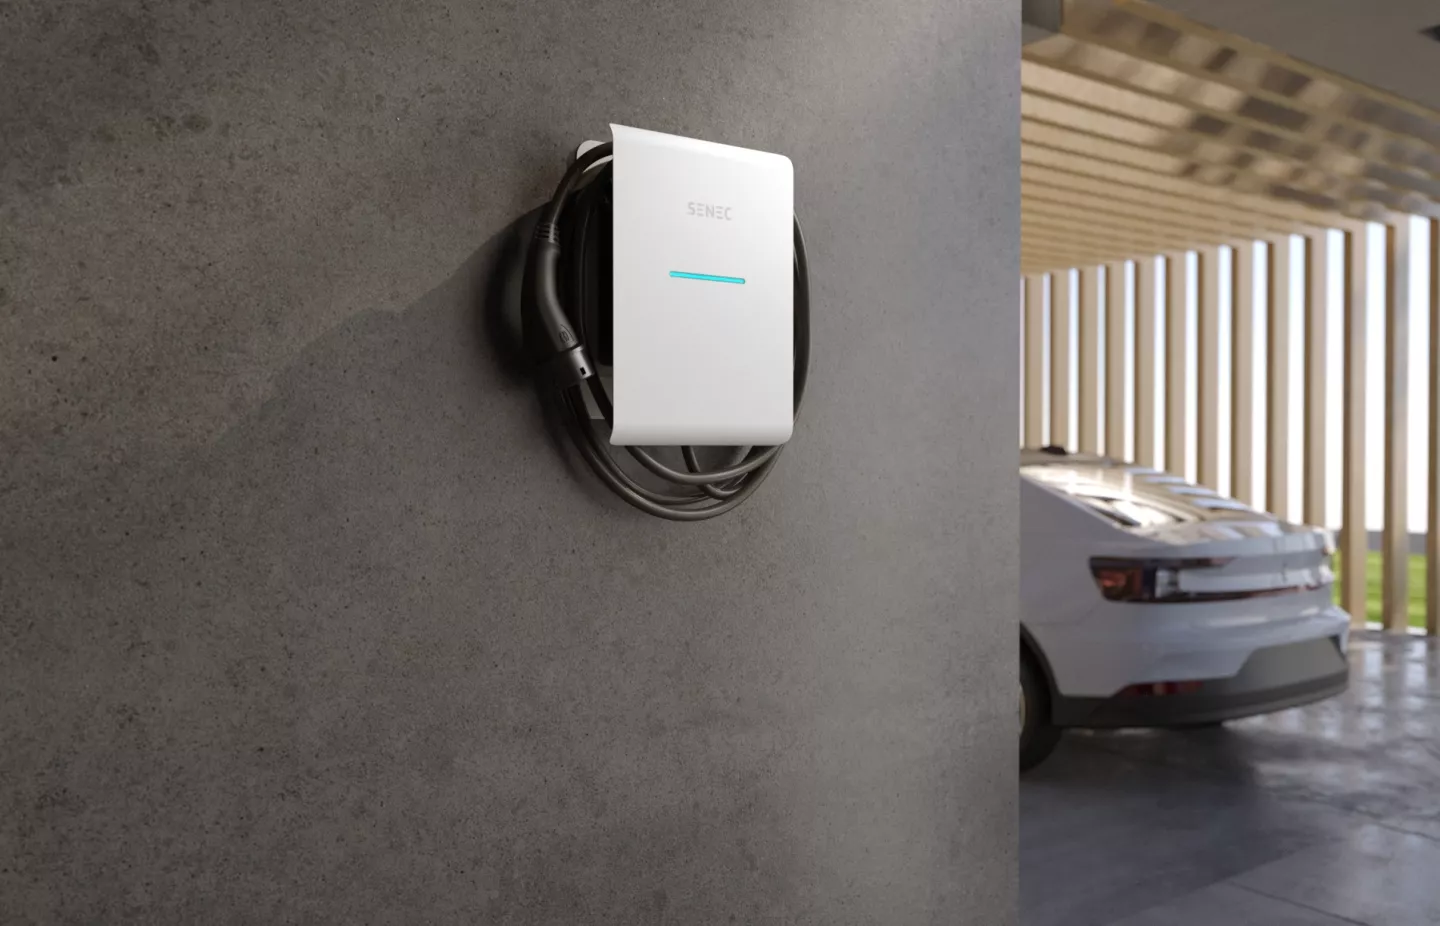 SENEC.Wallbox pro s on a wall next to e-car